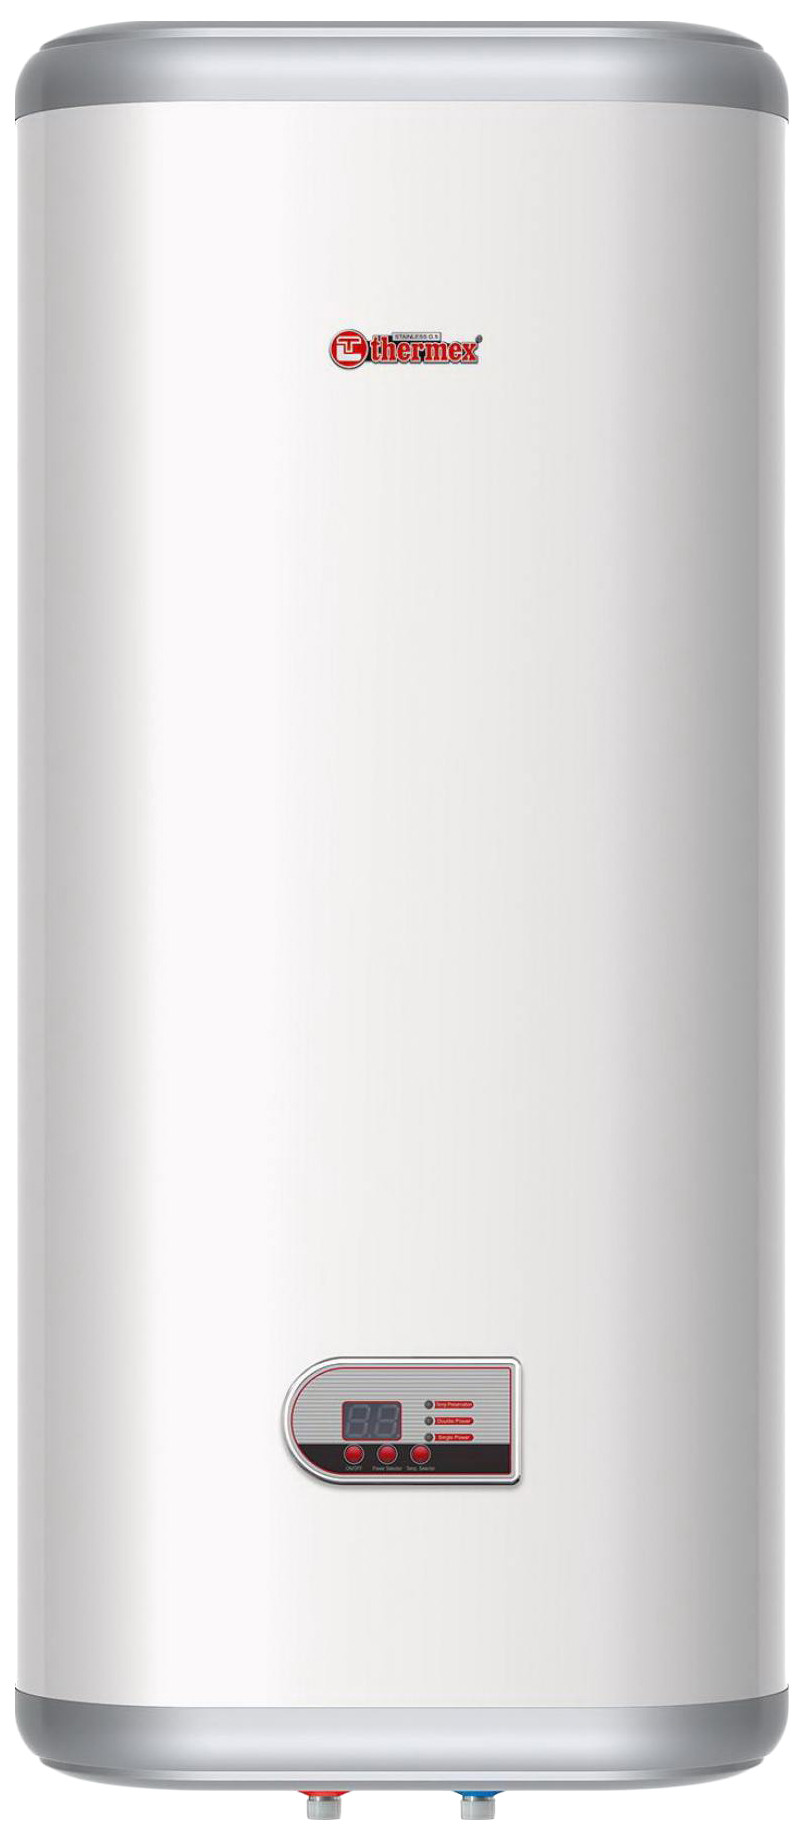 Водонагреватель накопительный THERMEX IF 100-V white/grey водонагреватель накопительный thermex irp 200 f white grey